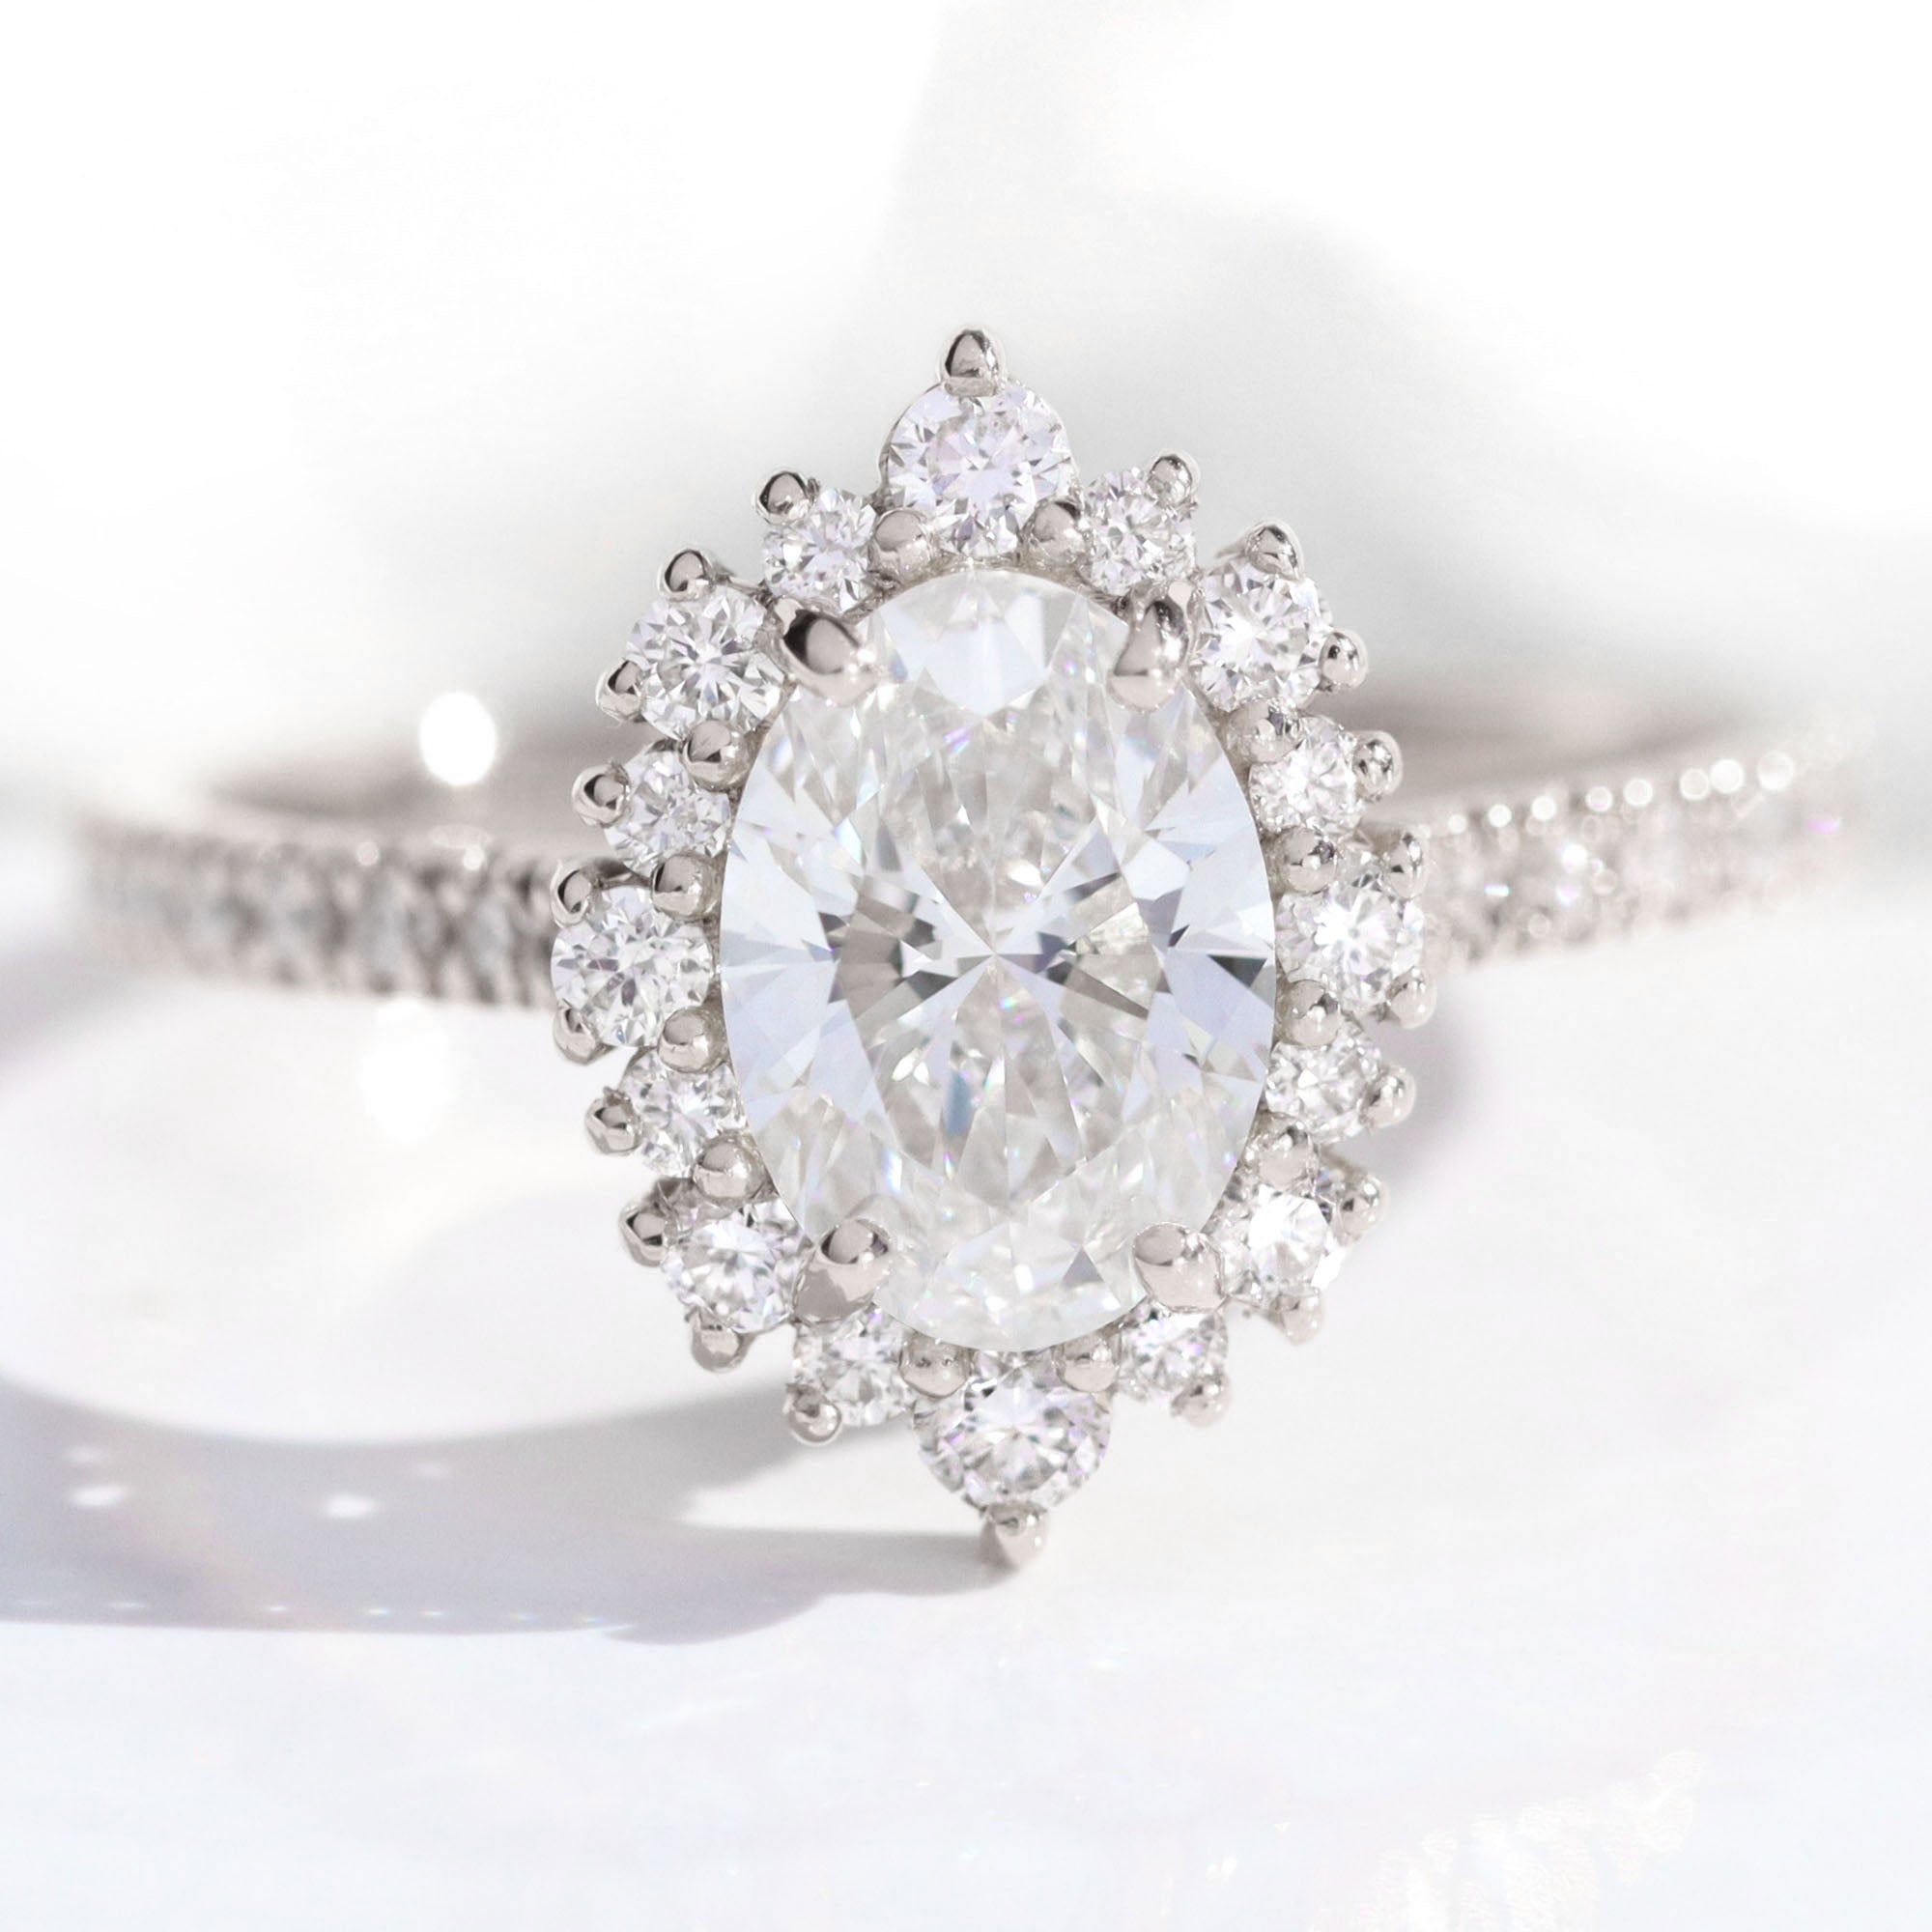 lab diamond ring white gold halo oval diamond engagement ring La More Design Jewelry